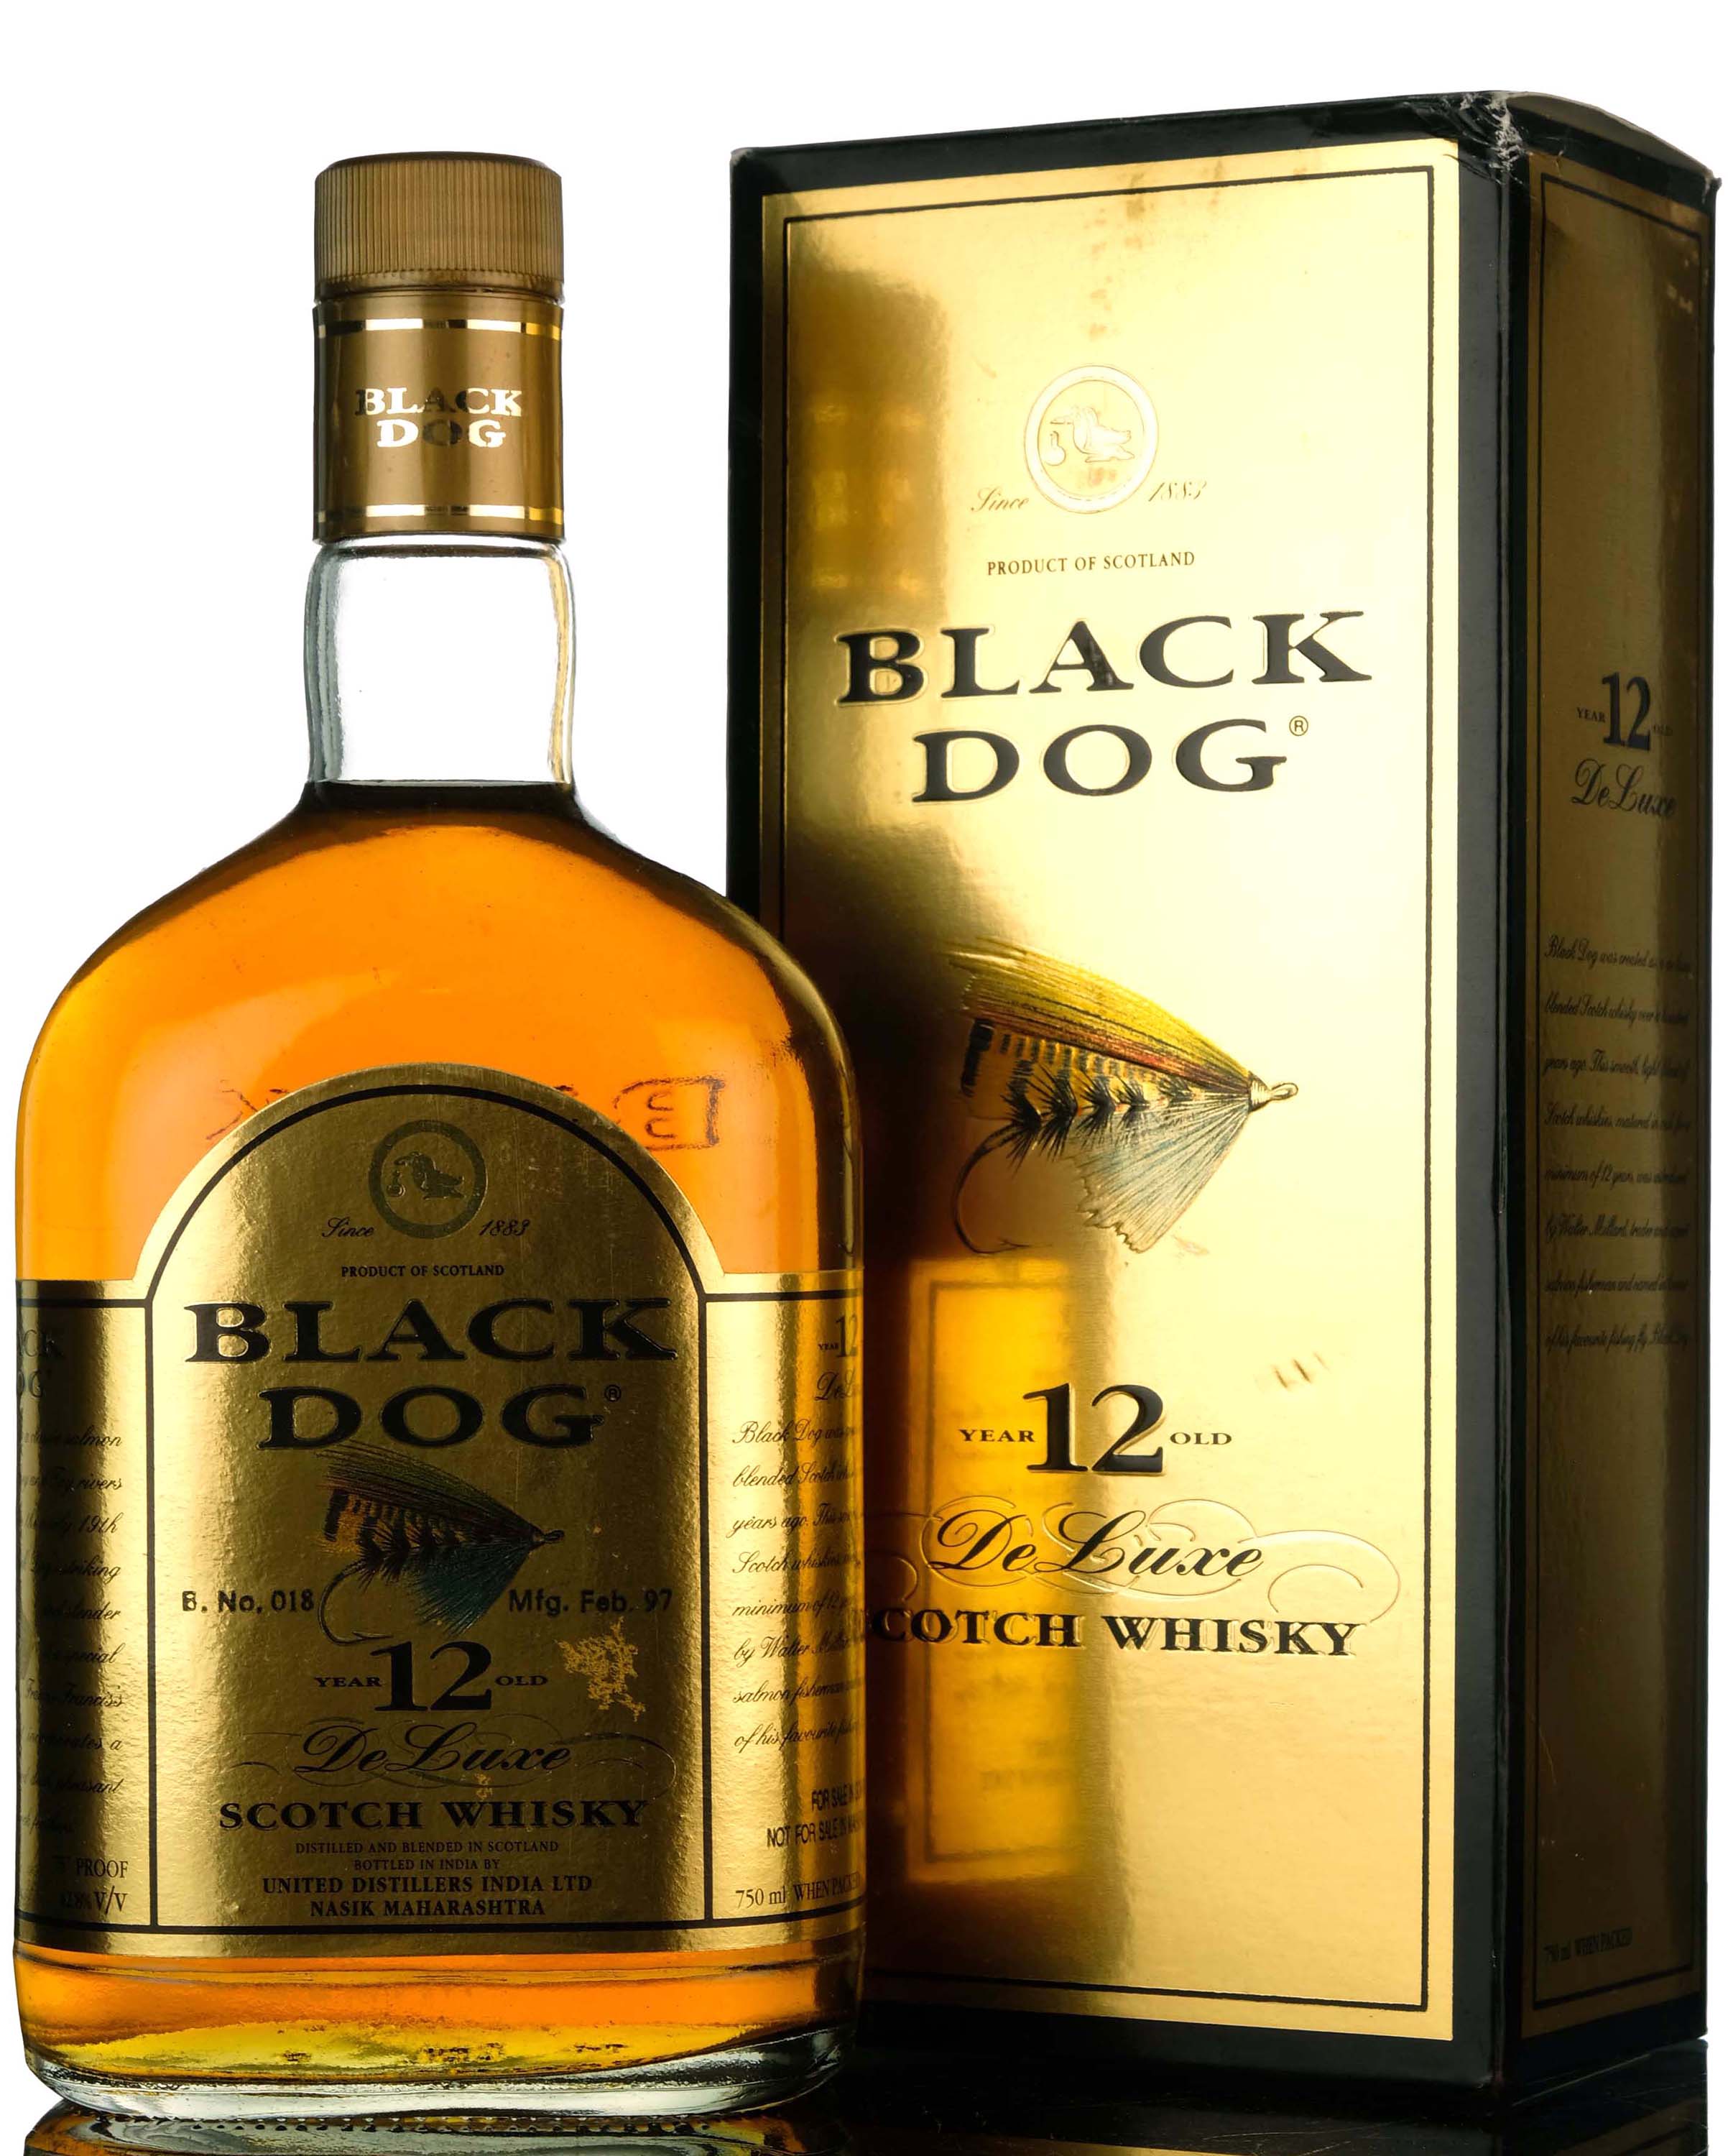 Black Dog 12 Year Old - Batch 18 - 1997 Release